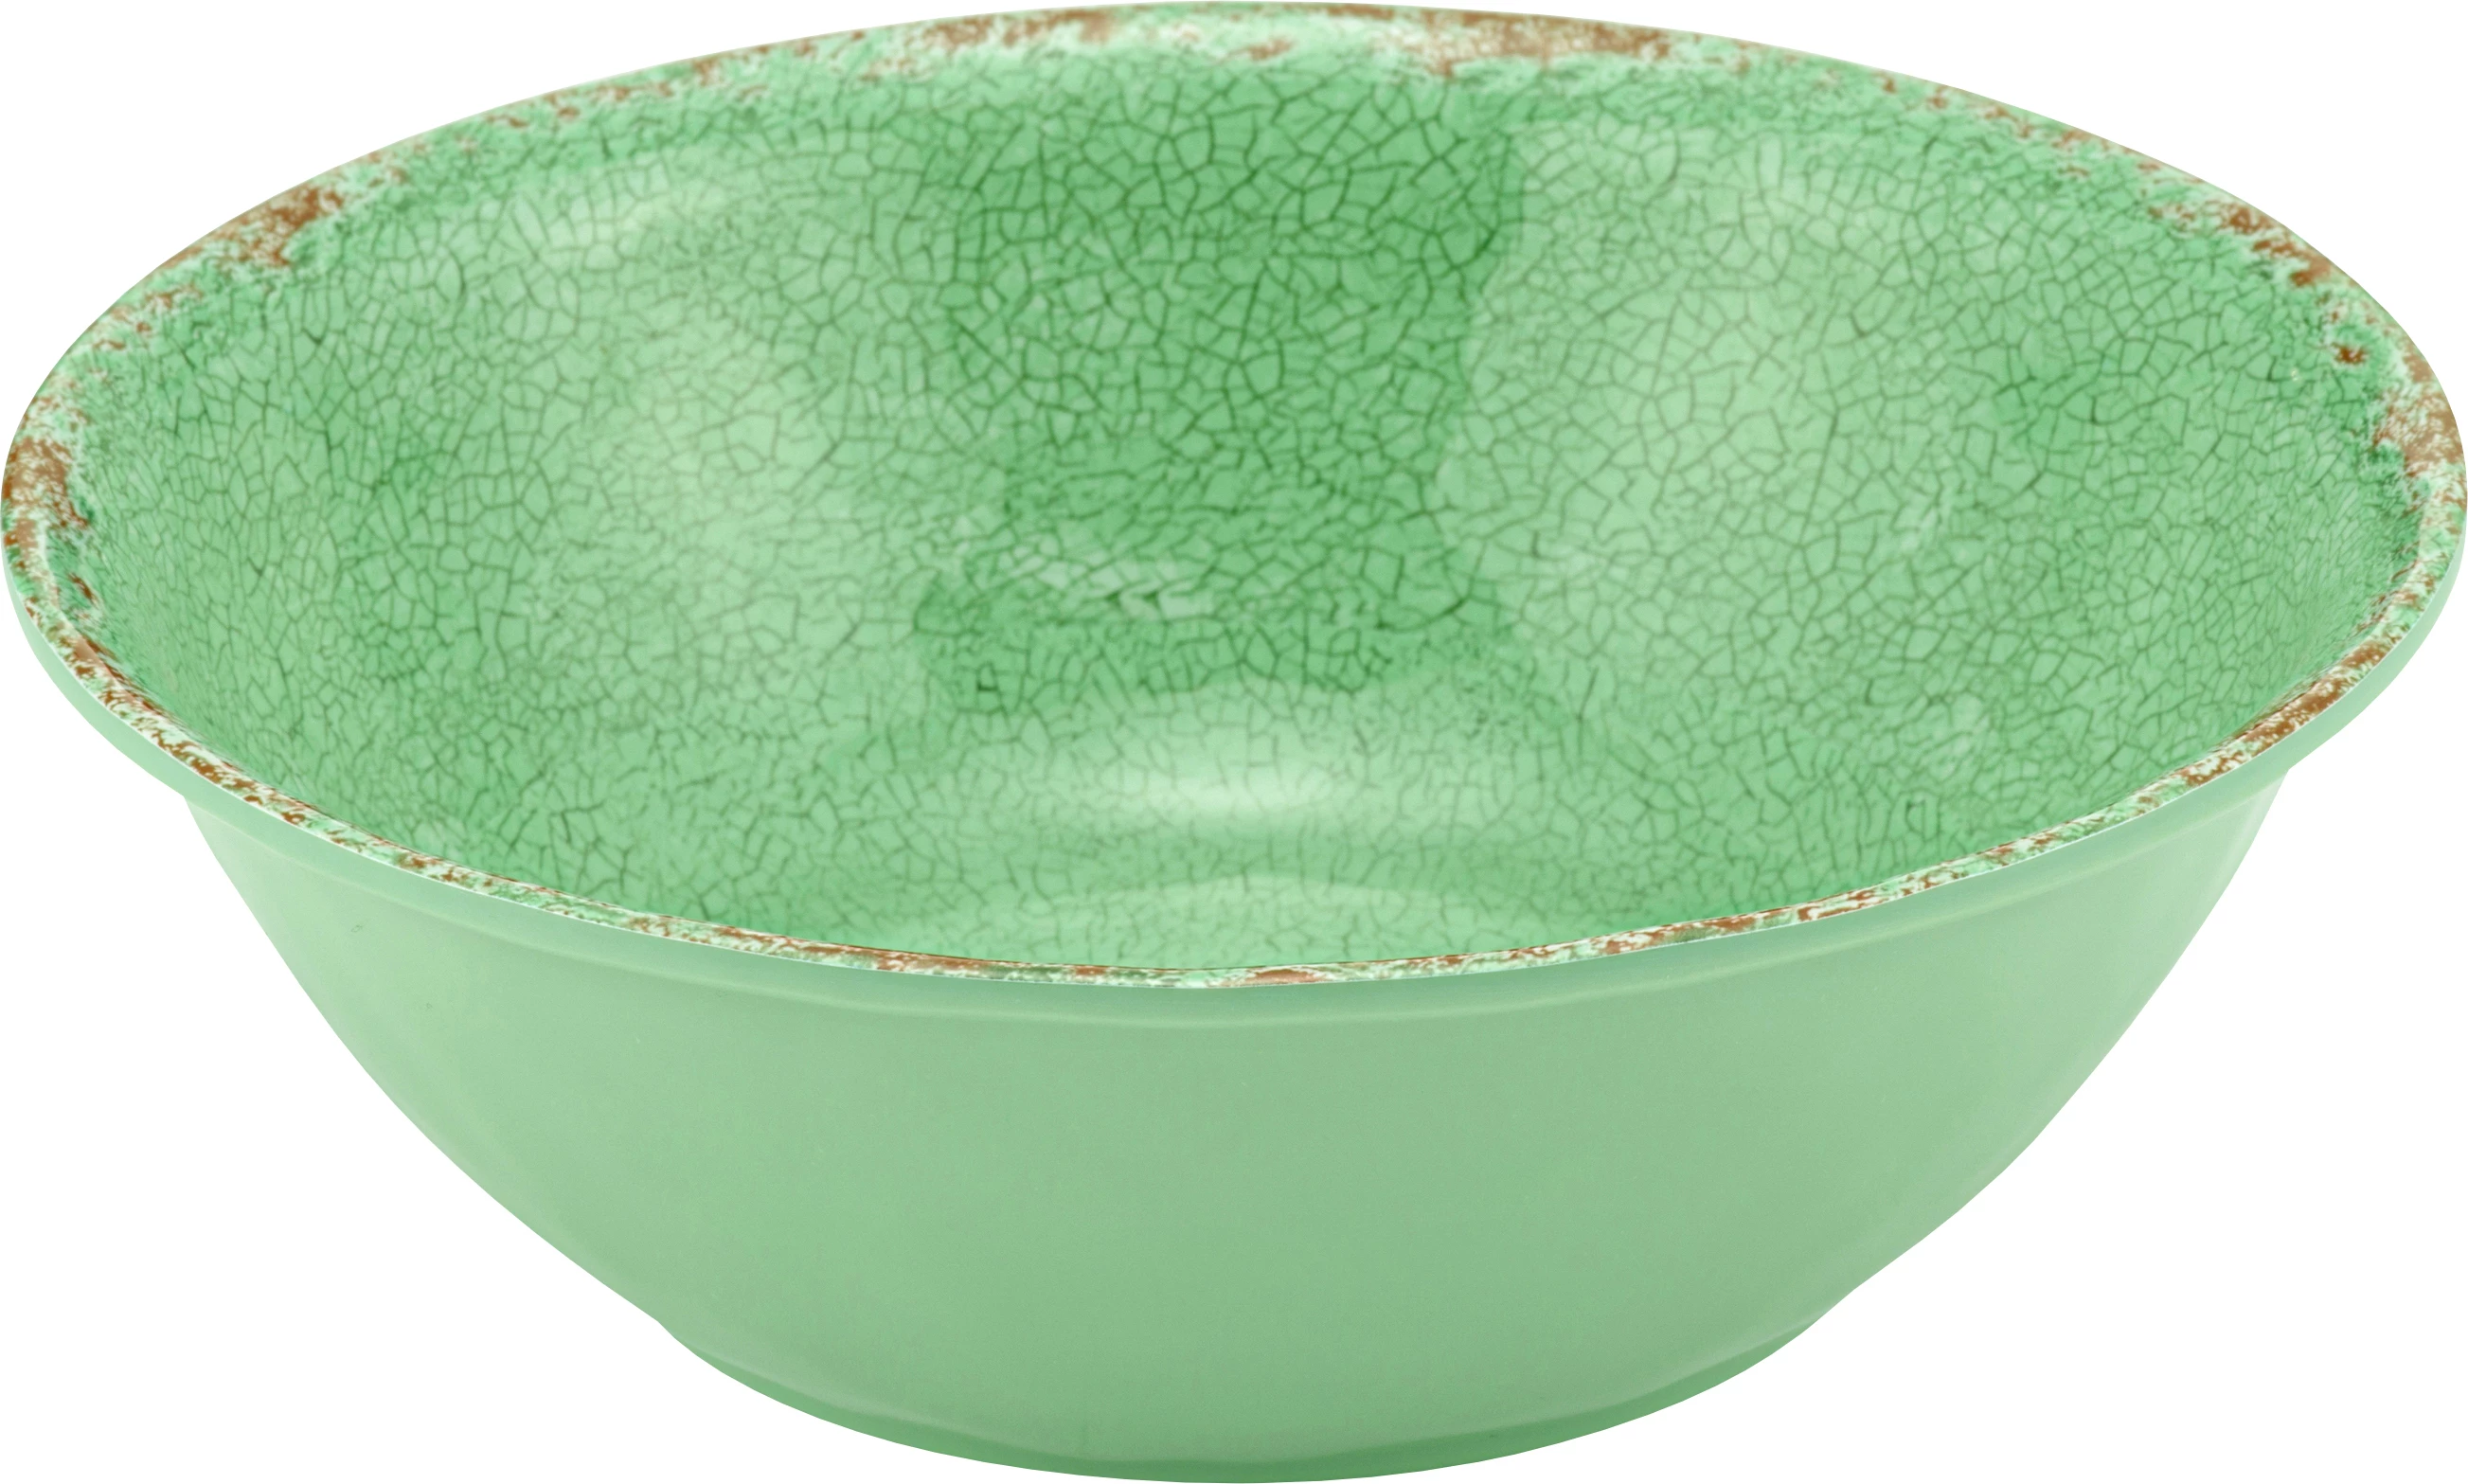 Dalebrook Casablanca skål, grøn, 130 cl, ø21 cm